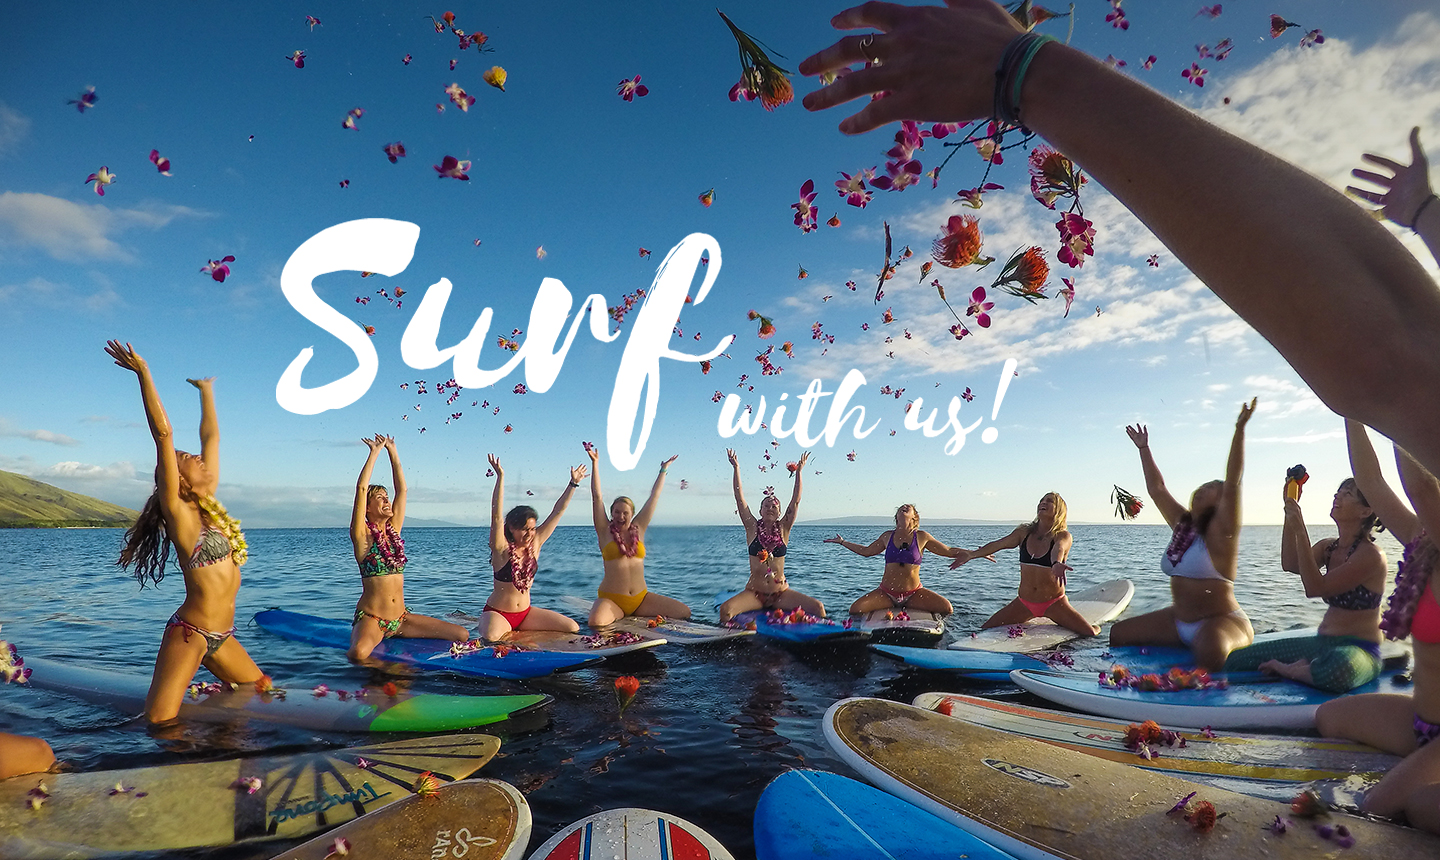 Maui Surfer Girls